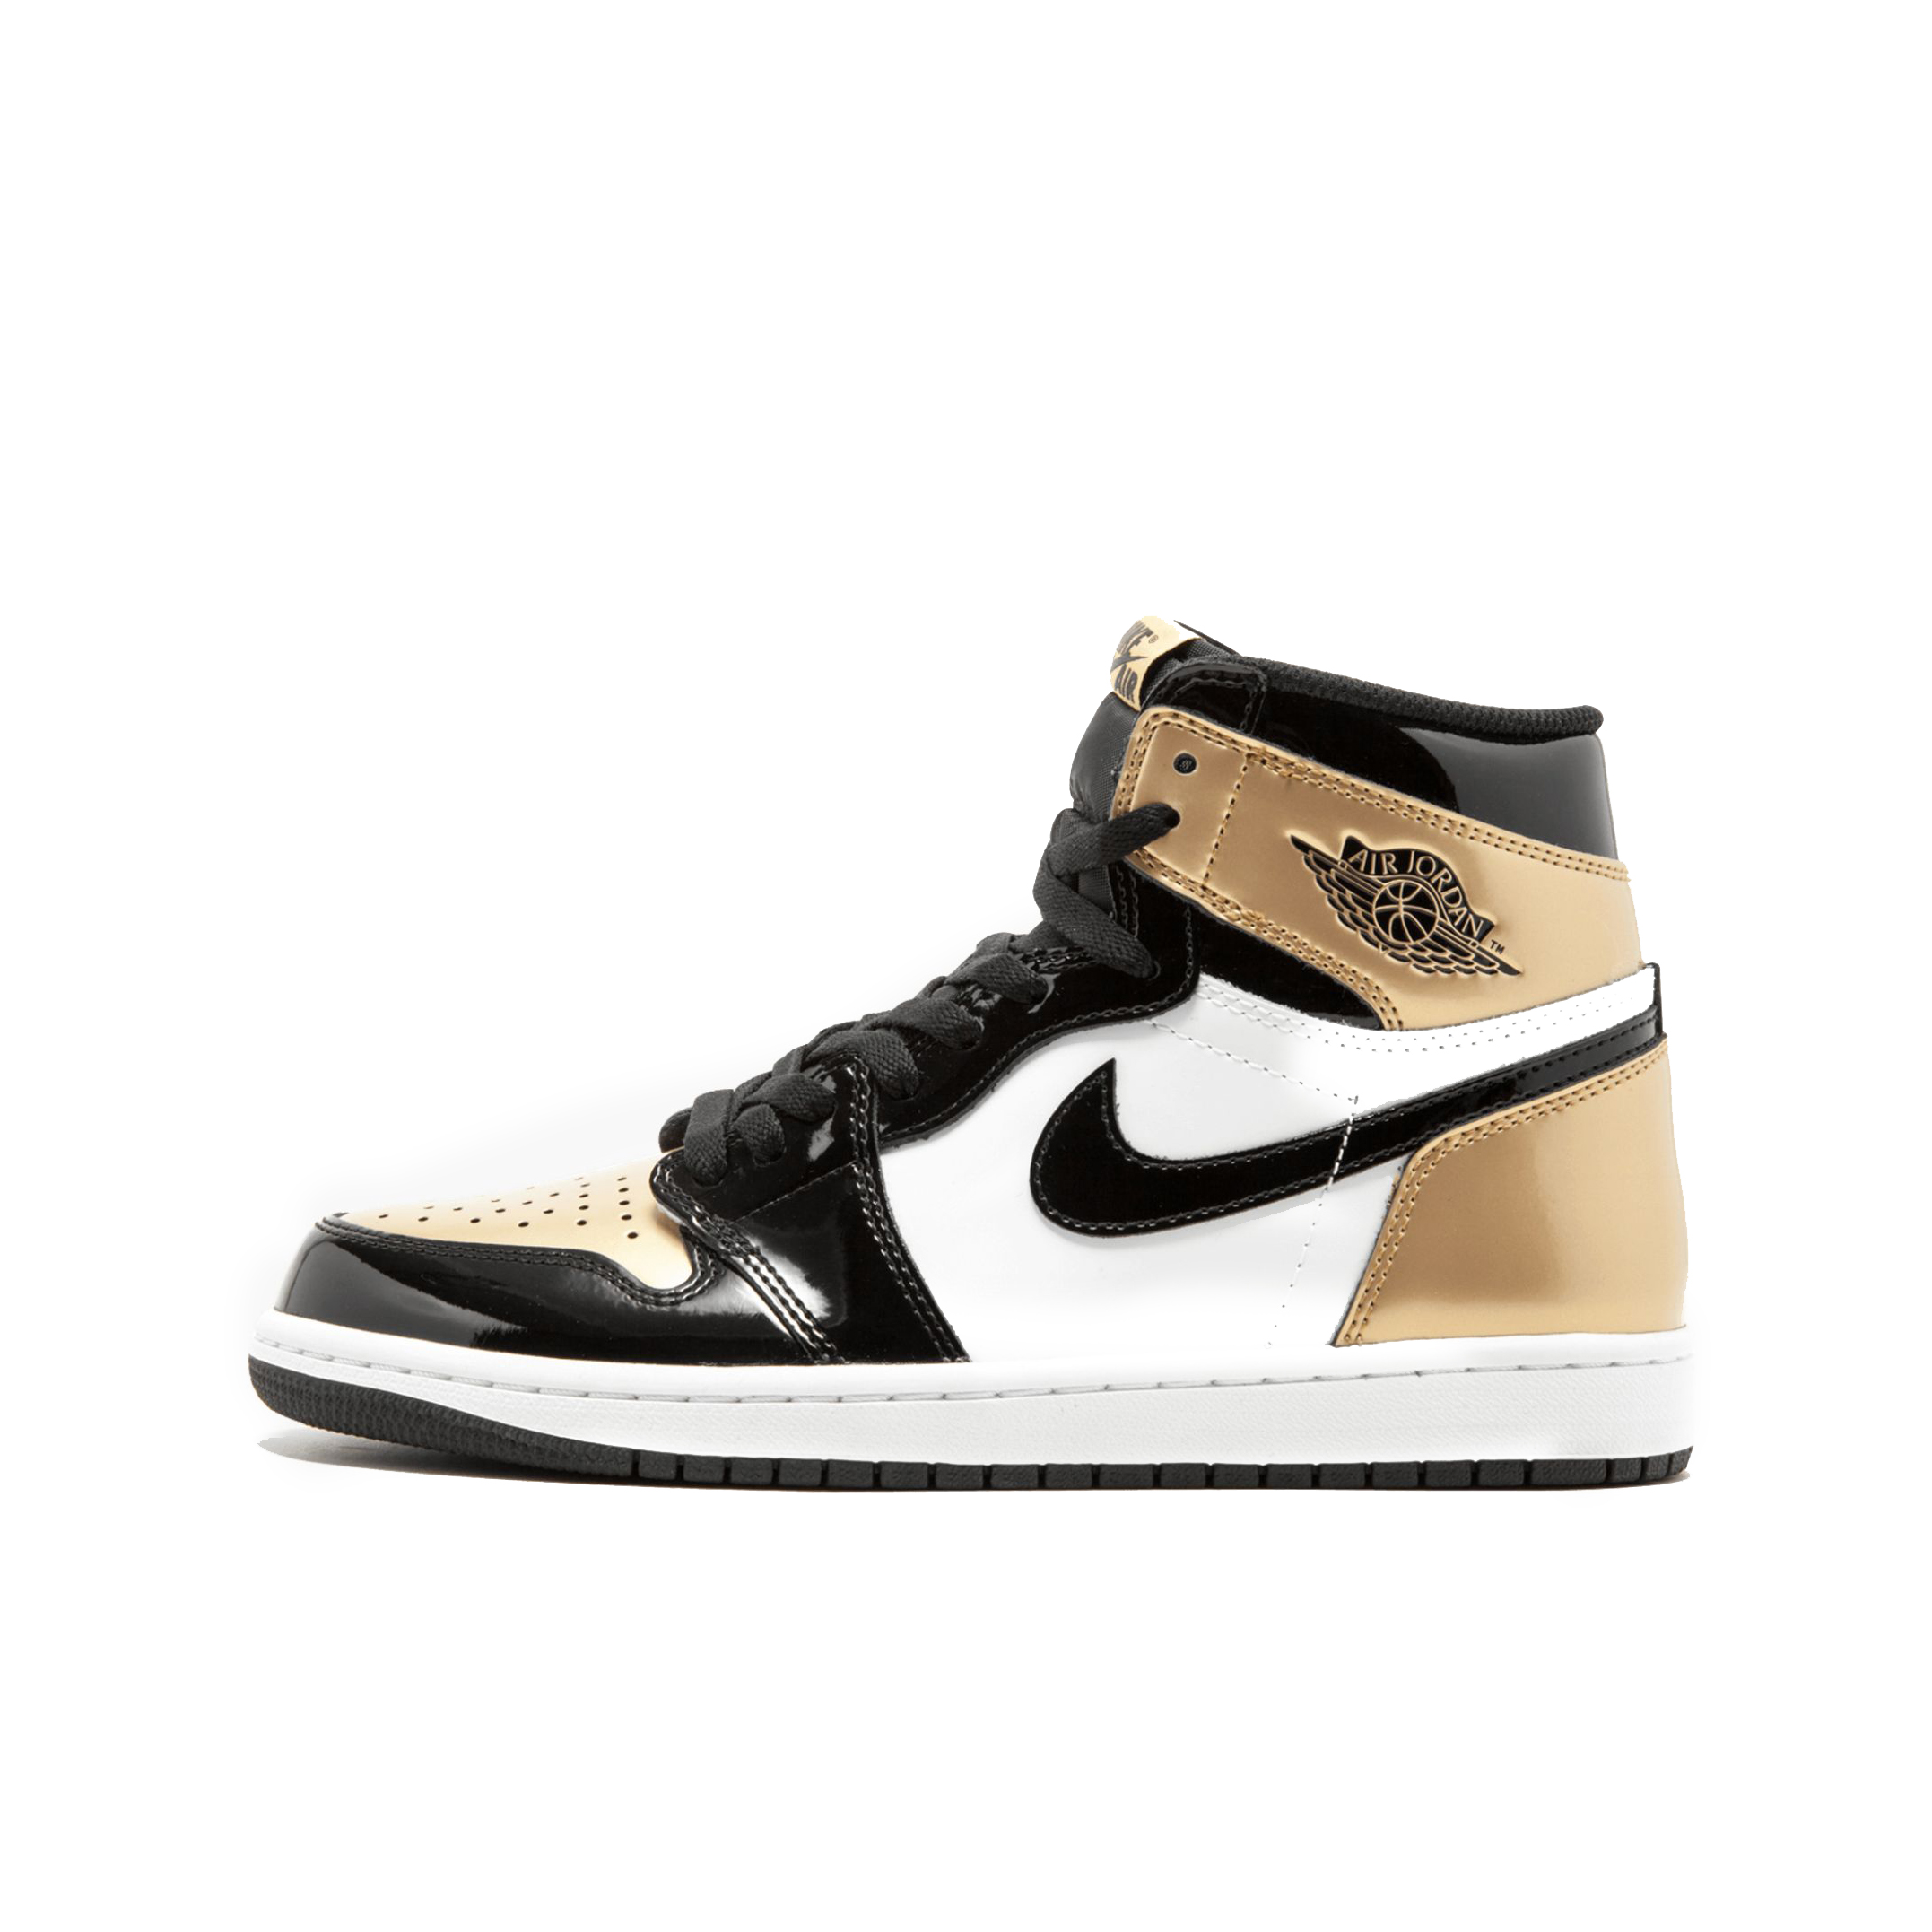 Nike Air Jordan 1 Retro High OG NRG “Petent Gold Toe”